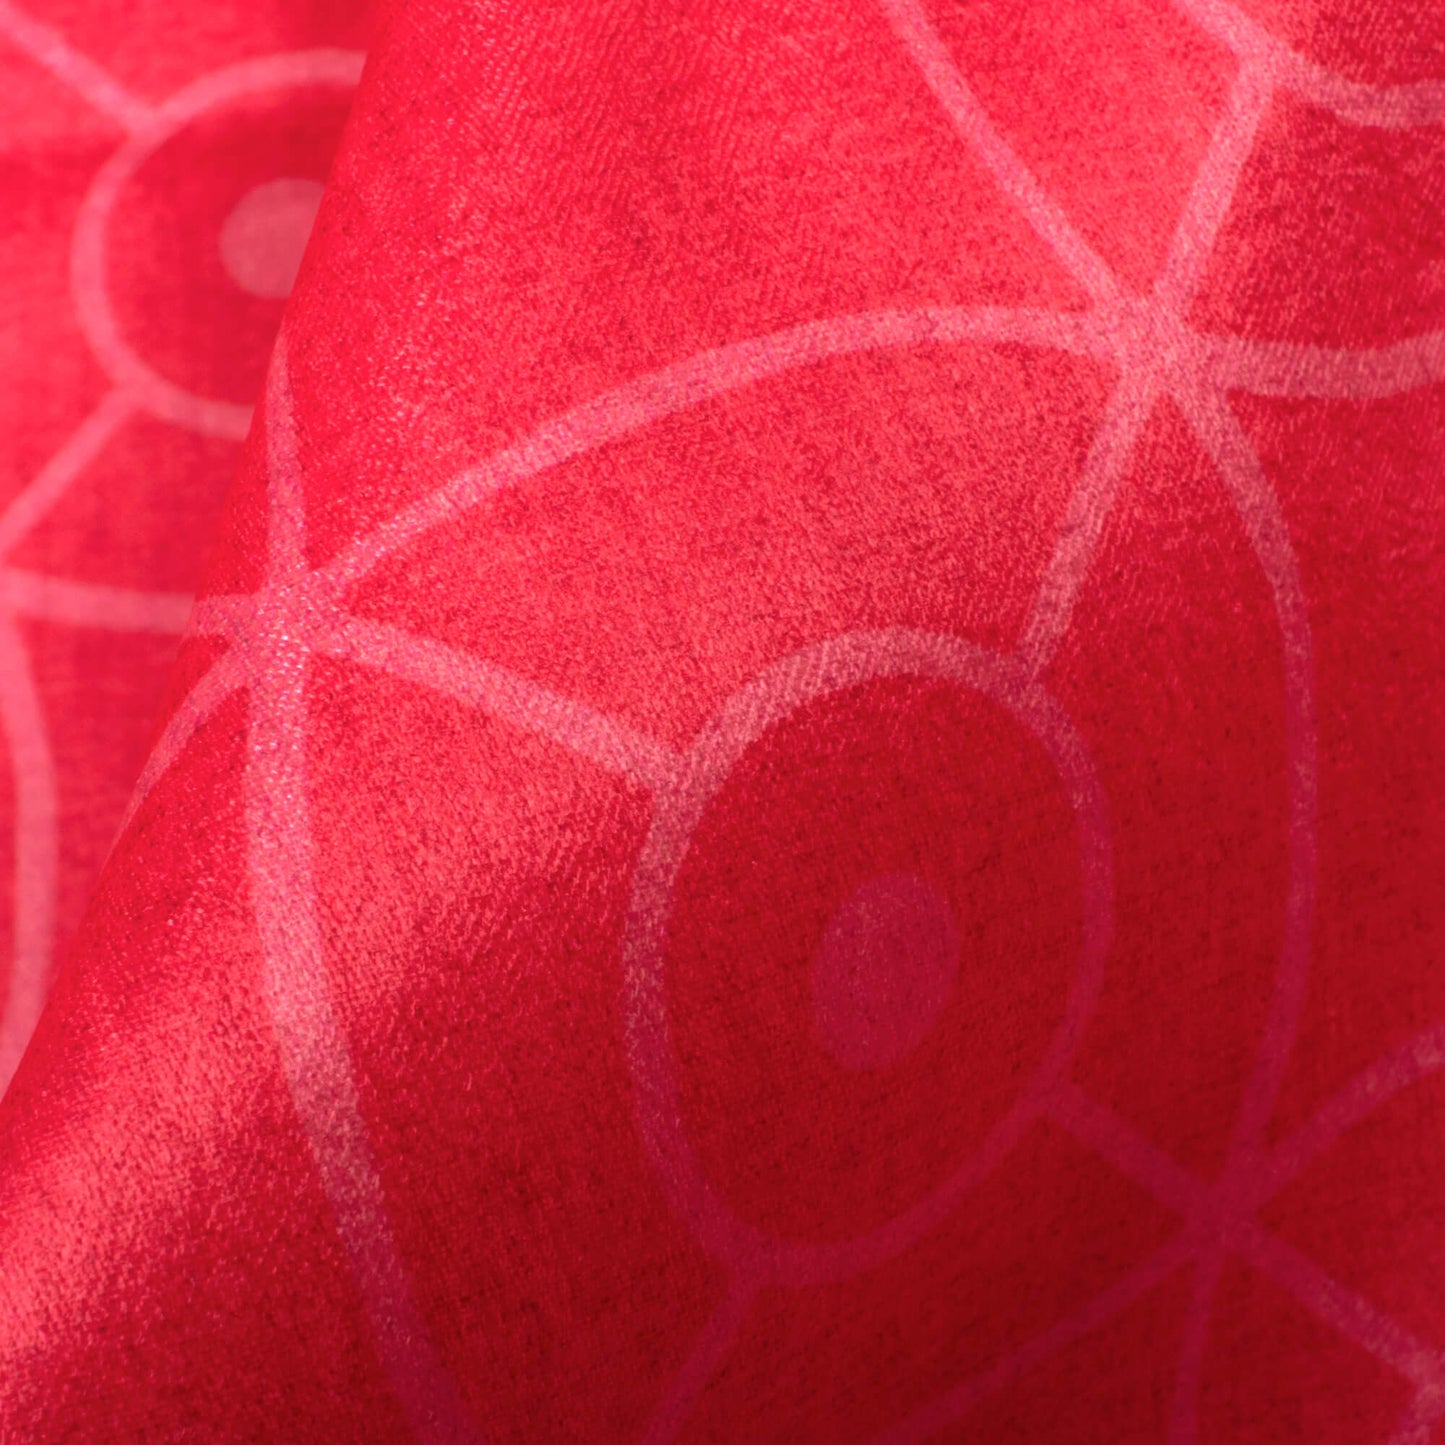 Cerise Pink Geometric Pattern Digital Print Lush Satin Fabric